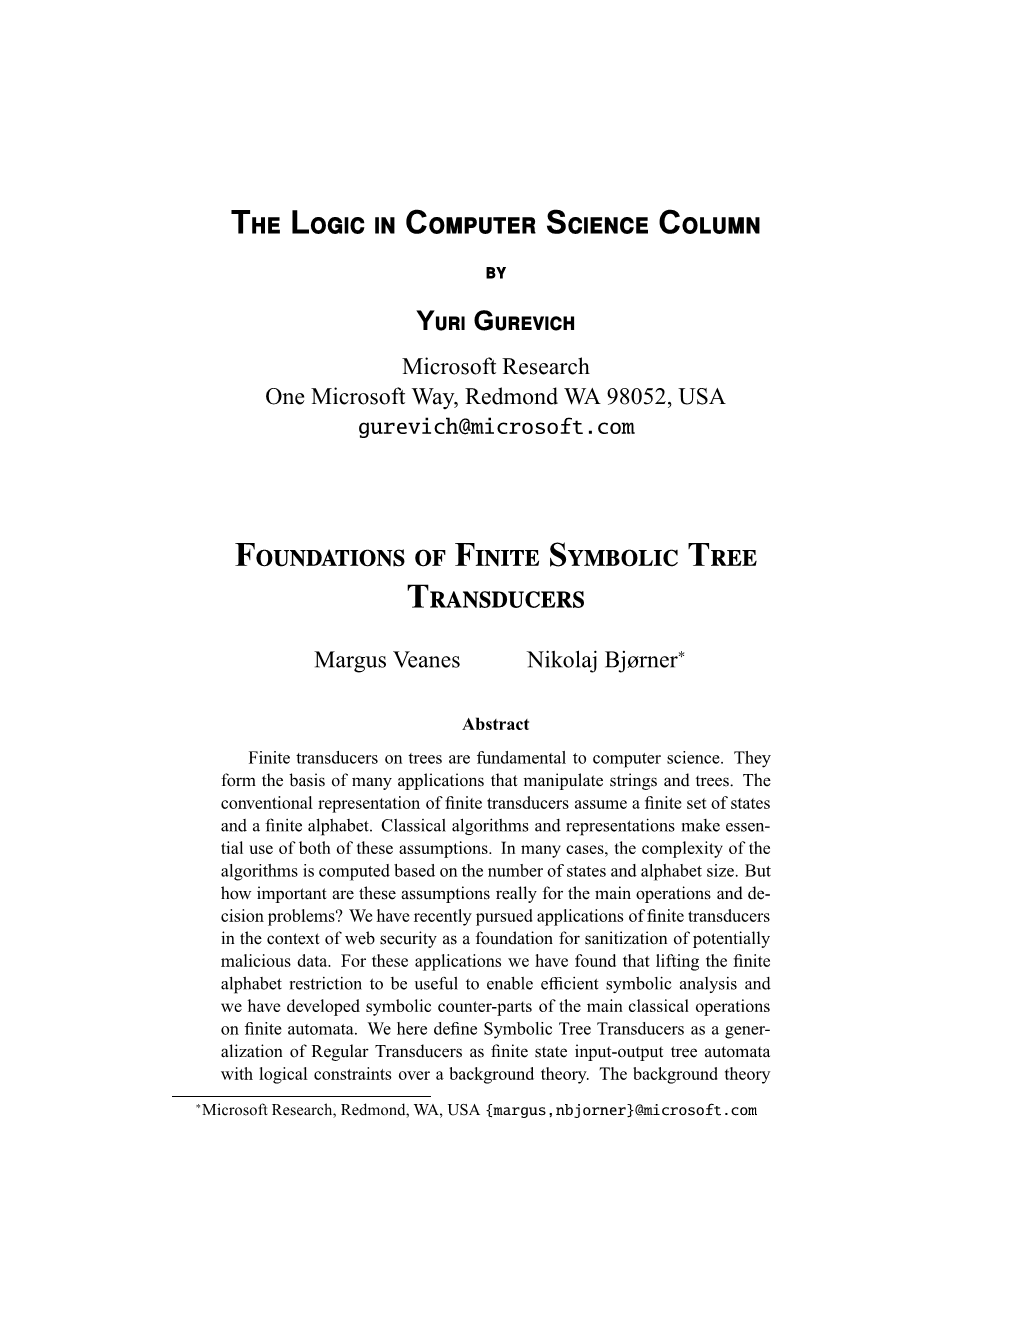 Foundations of Finite Symbolic Tree Transducers